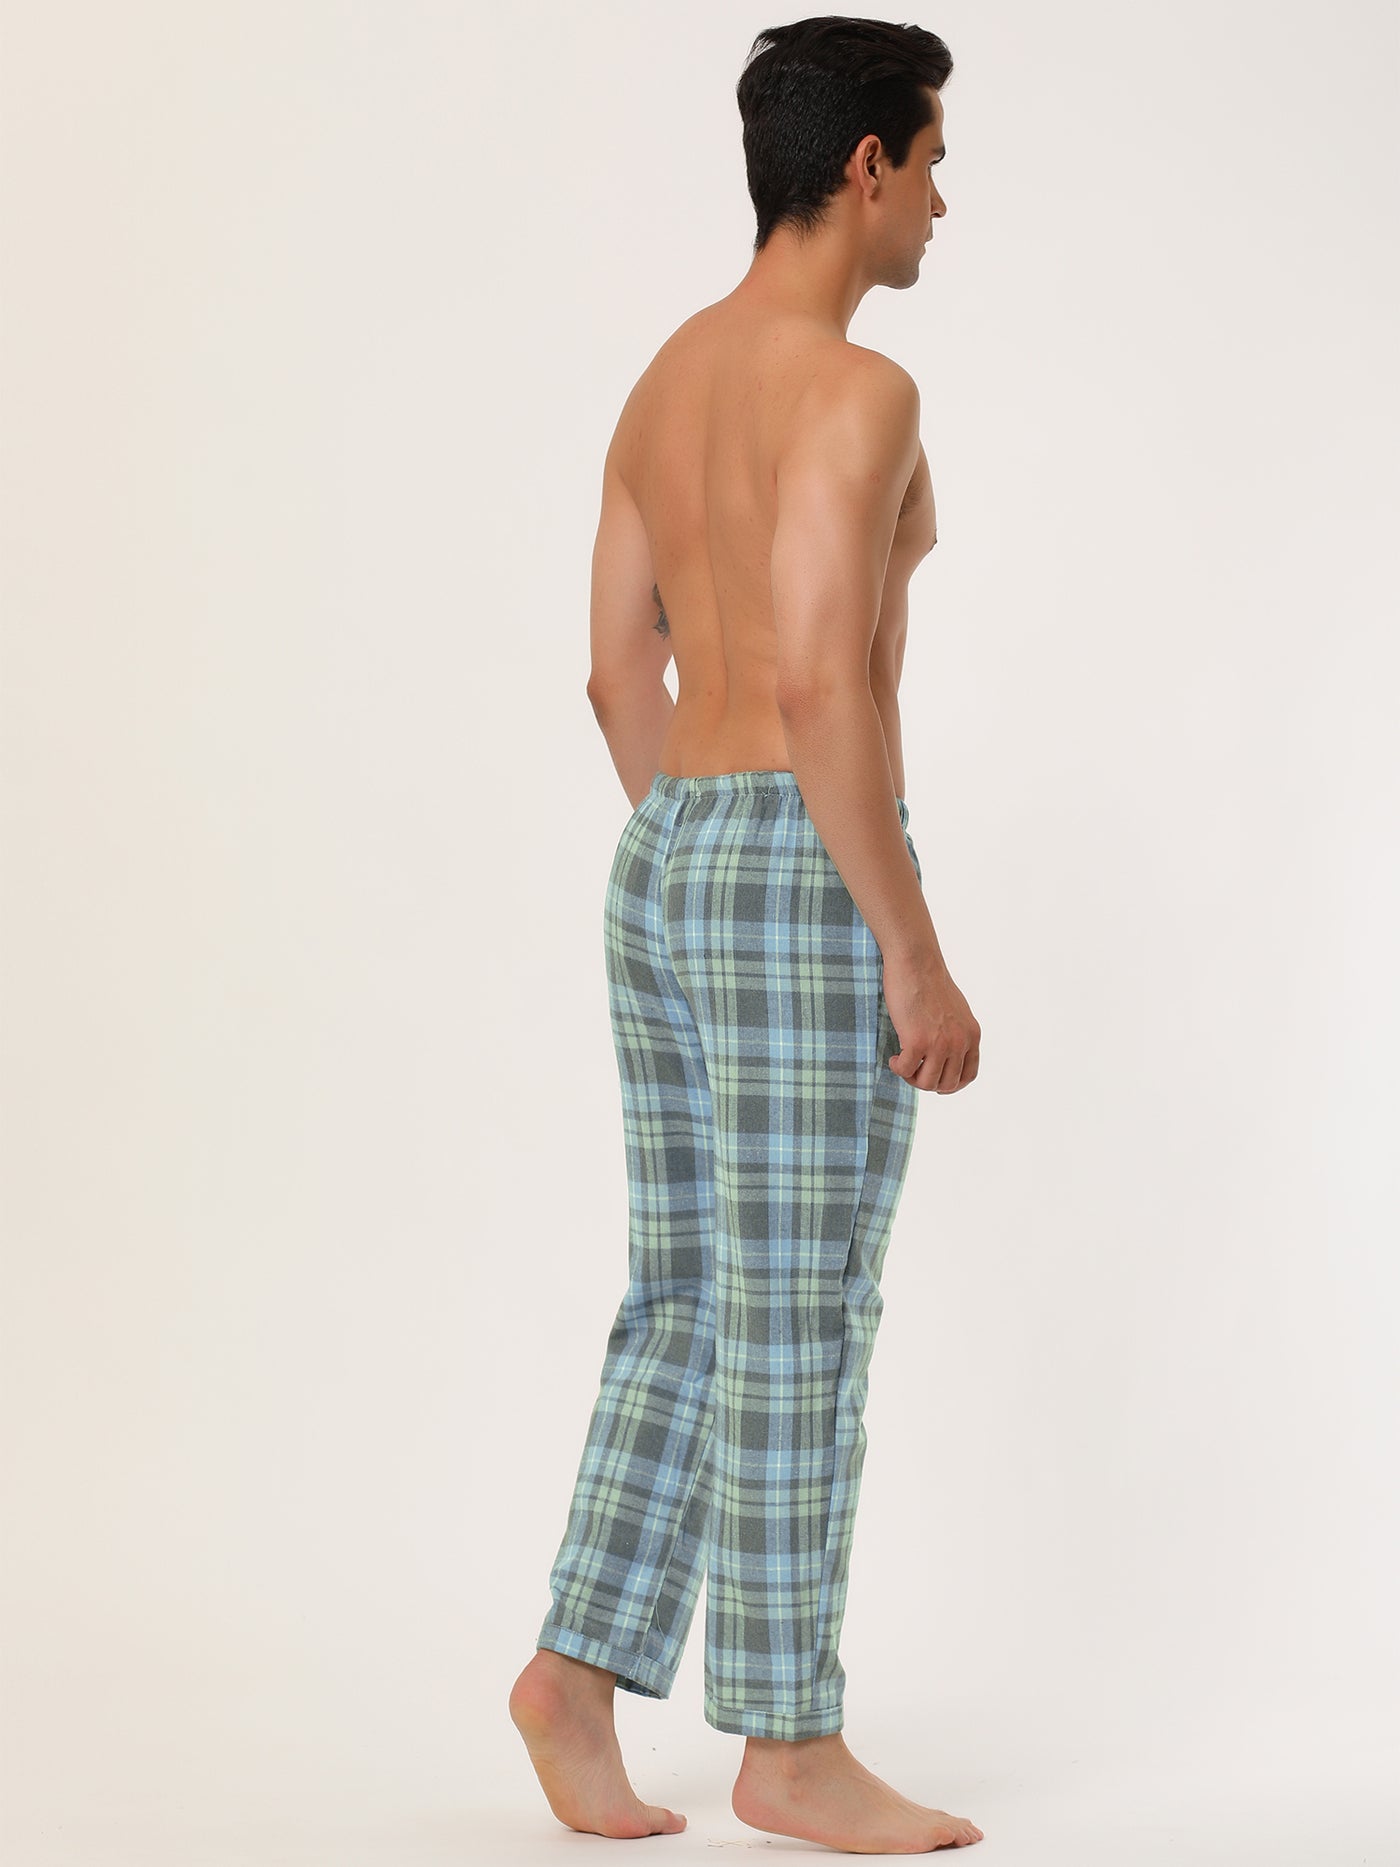 Bublédon Winter Flannel Plaid Drawstring Waist Pajamas Pants